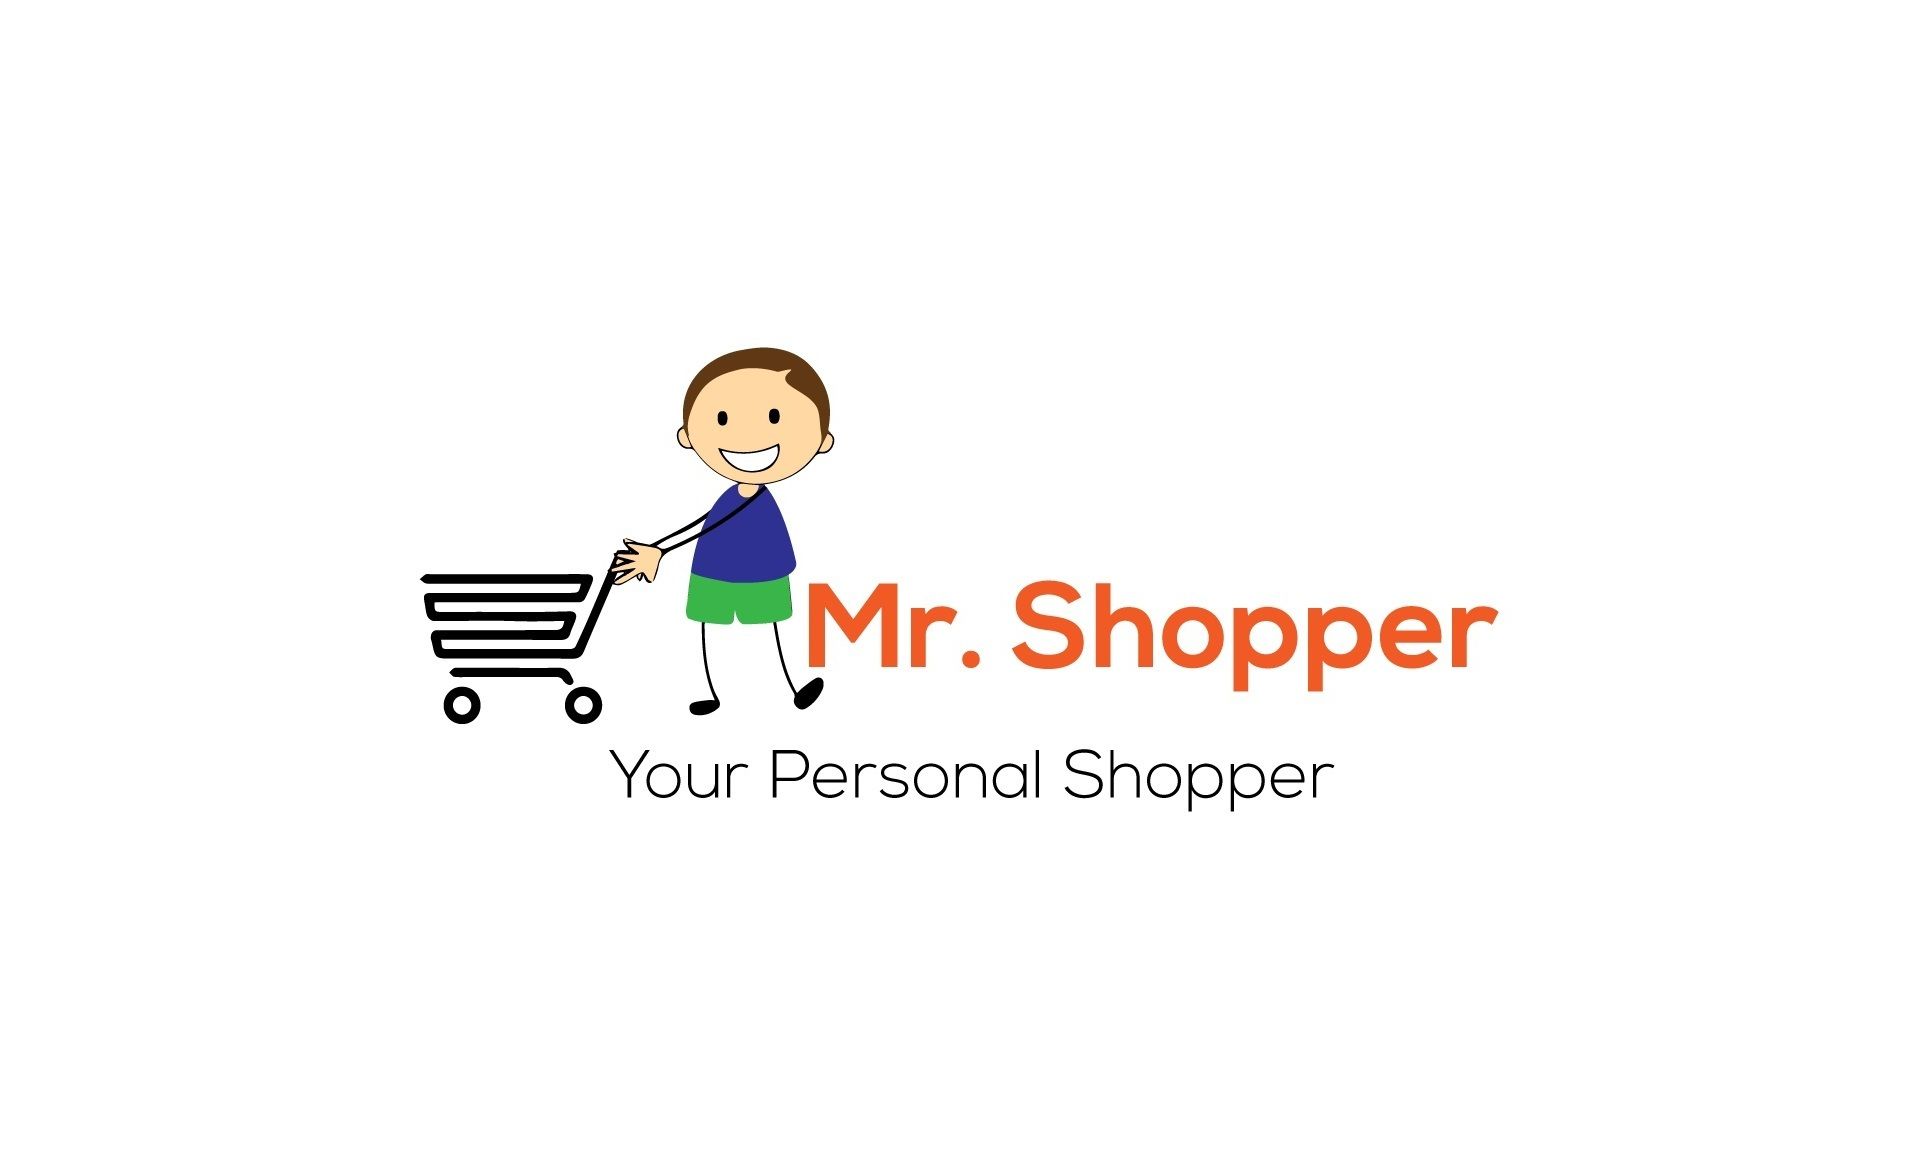 Mr. Shopper